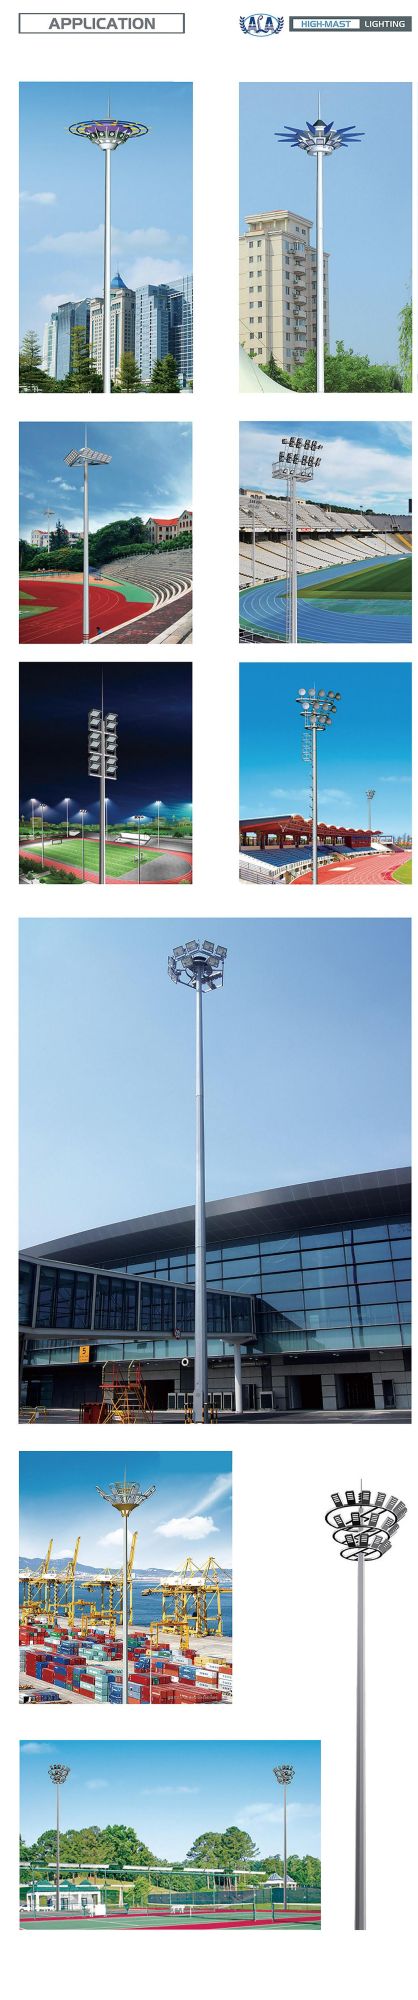 Ala 900W Soccer Field Football Stadium High Mast Outdoor LED Flood Light